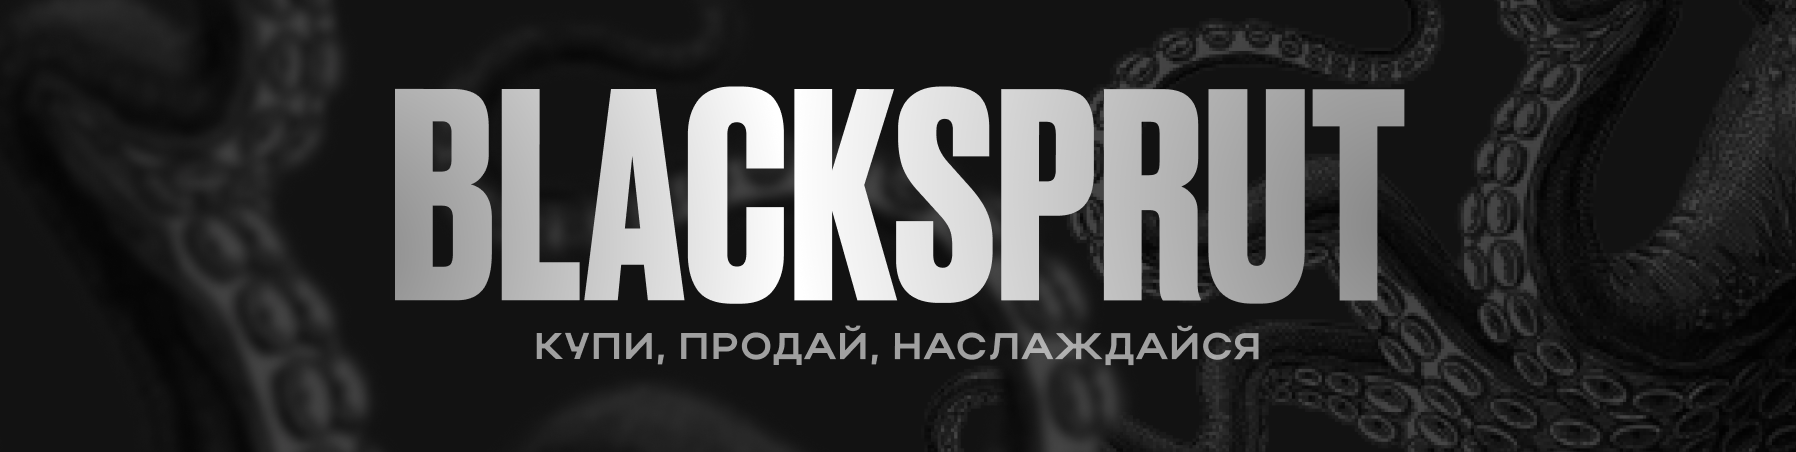 free blacksprut скачать даркнет2web